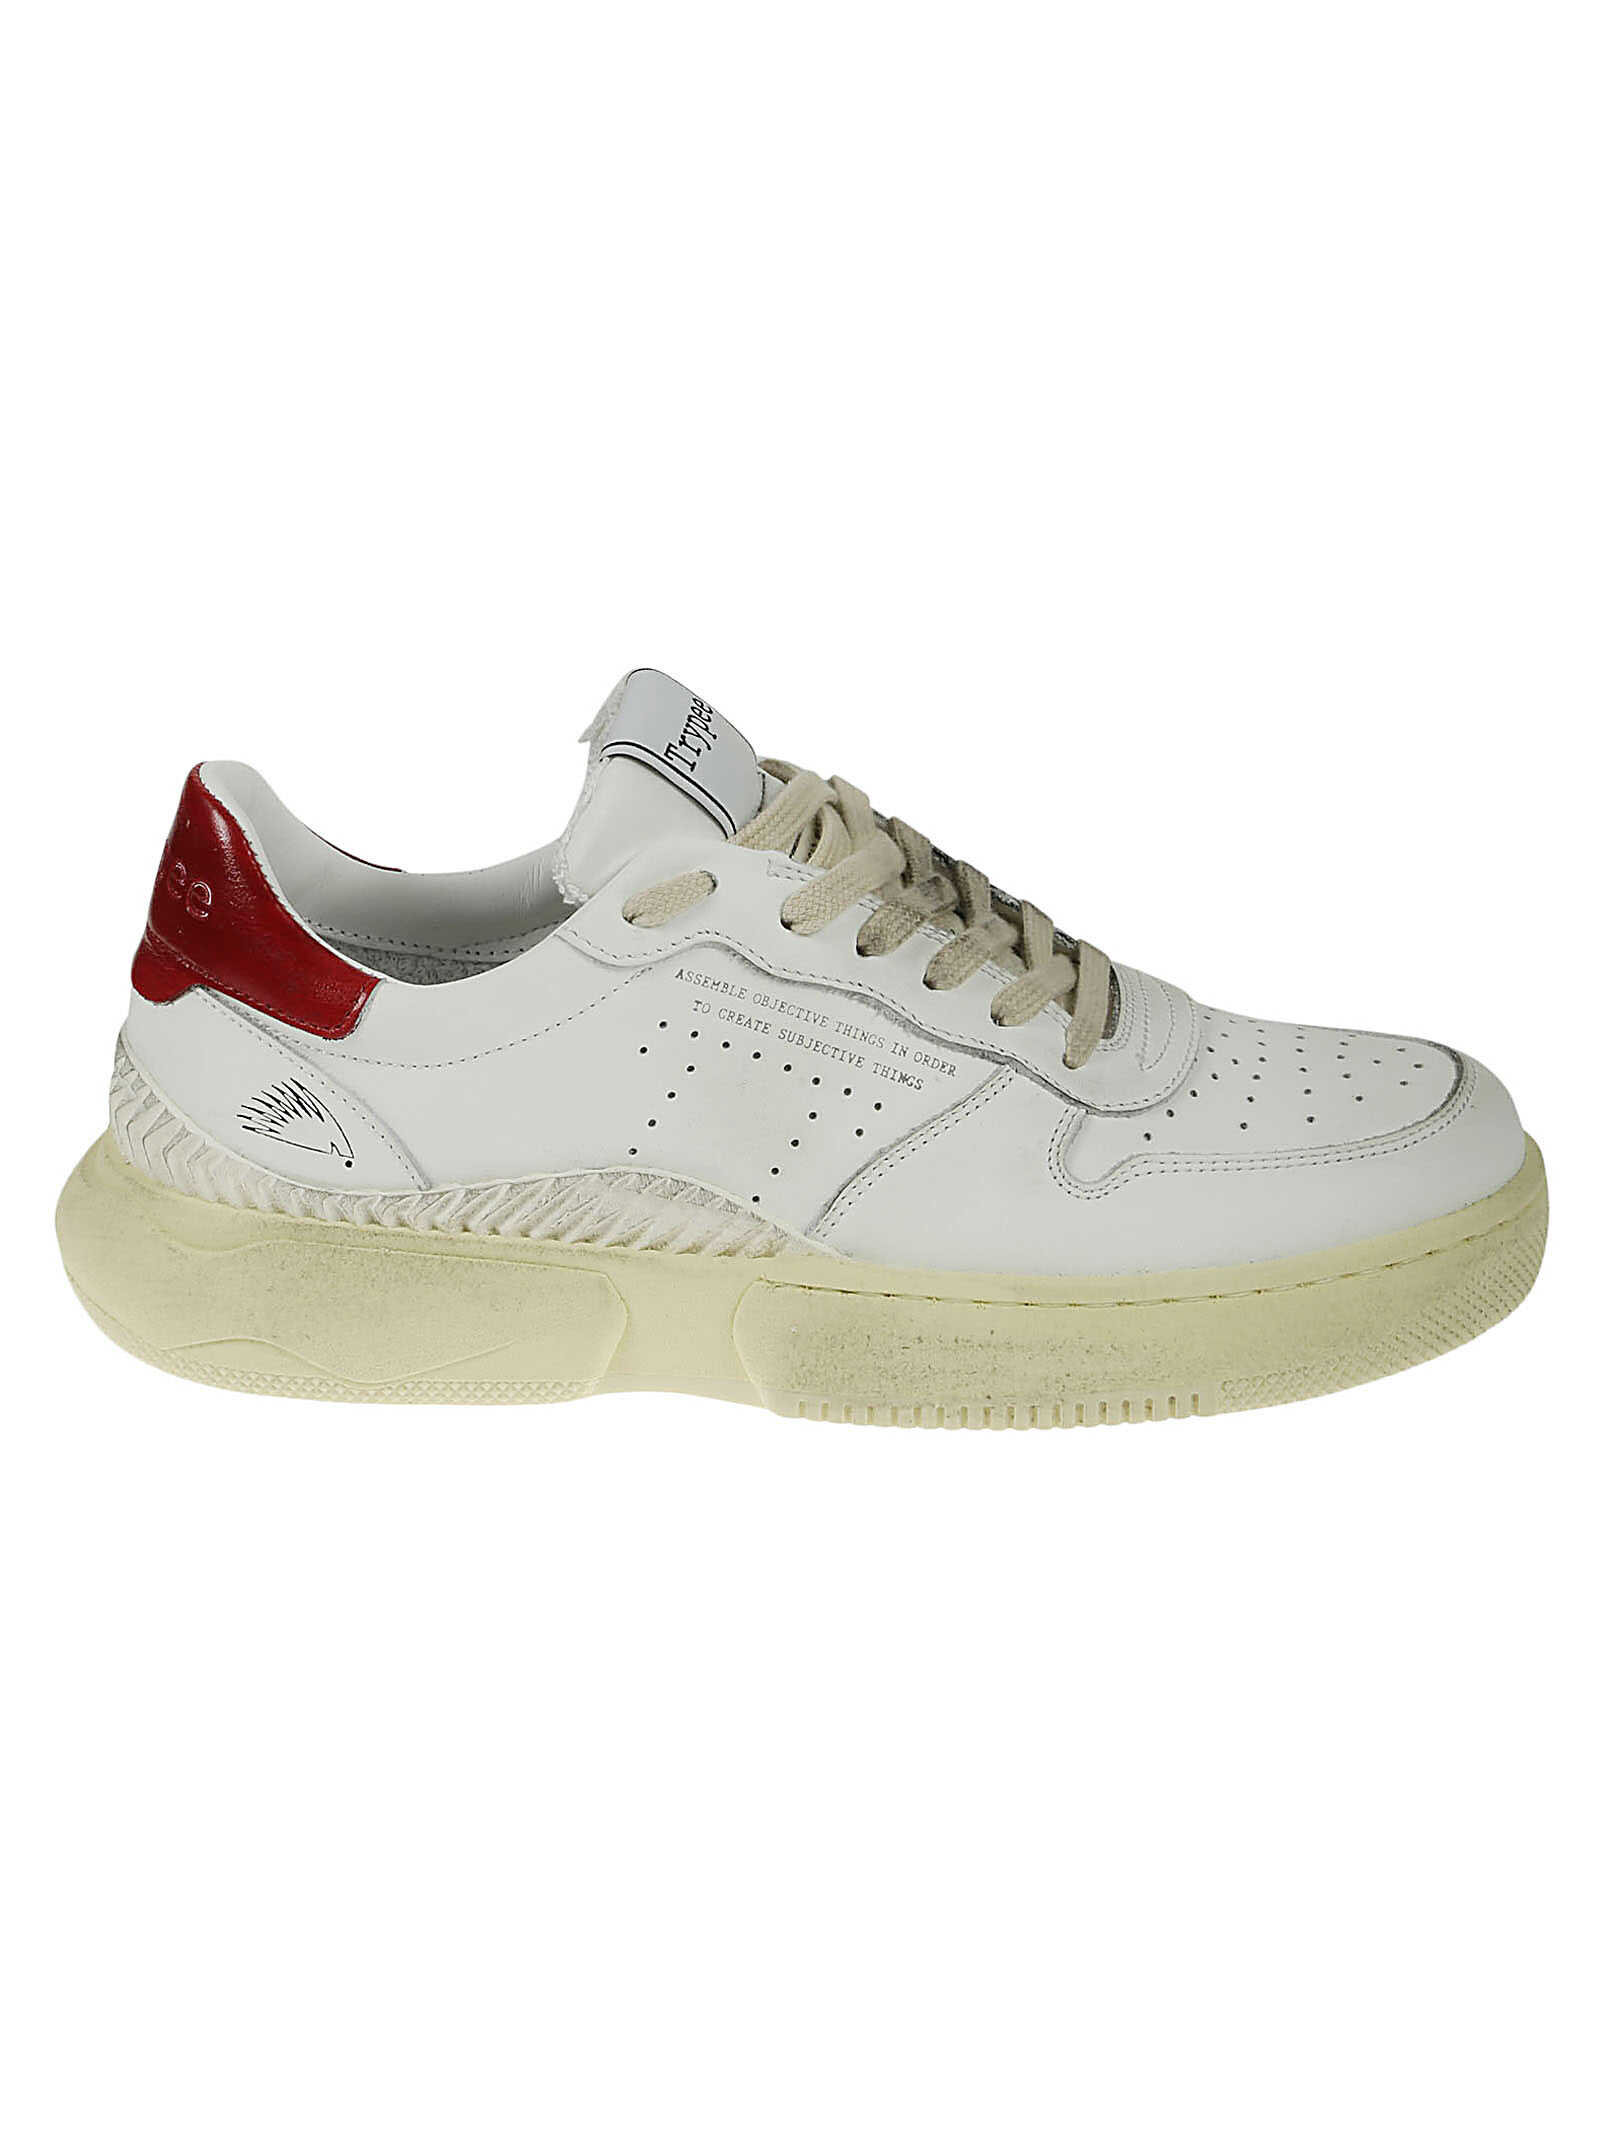 TRYPEE Trypee Sneakers S122 WHITE White